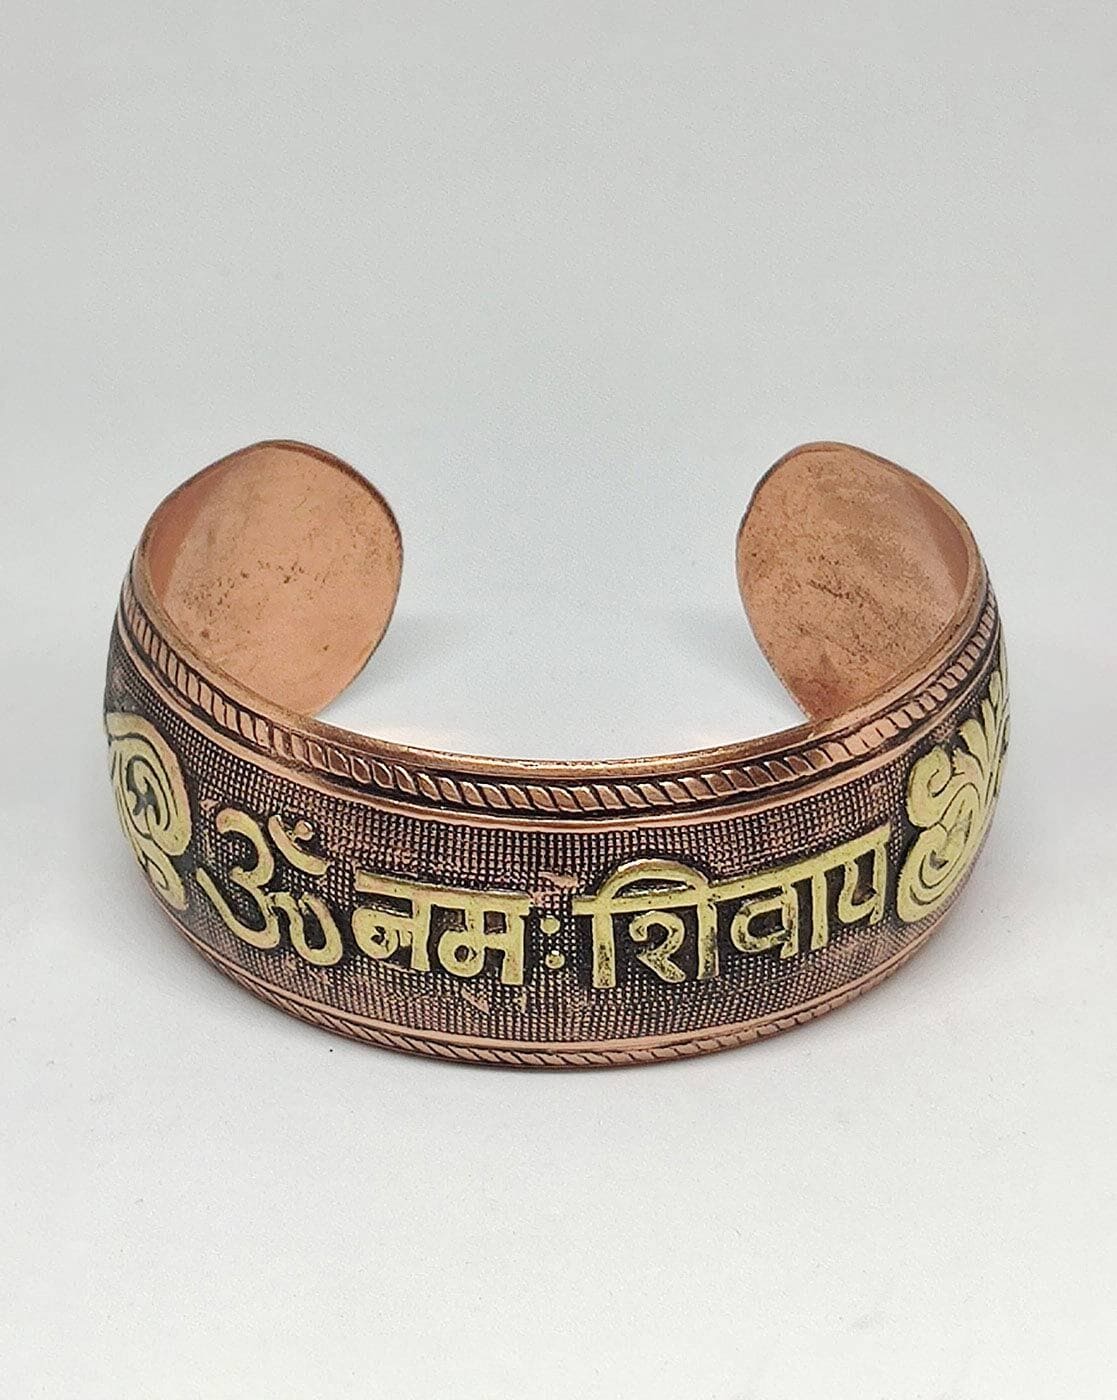 Om Namah Shivaya Shiva Shiv chant HINDU YOGA Copper BRACELET Wrist Band~2  pieces | eBay